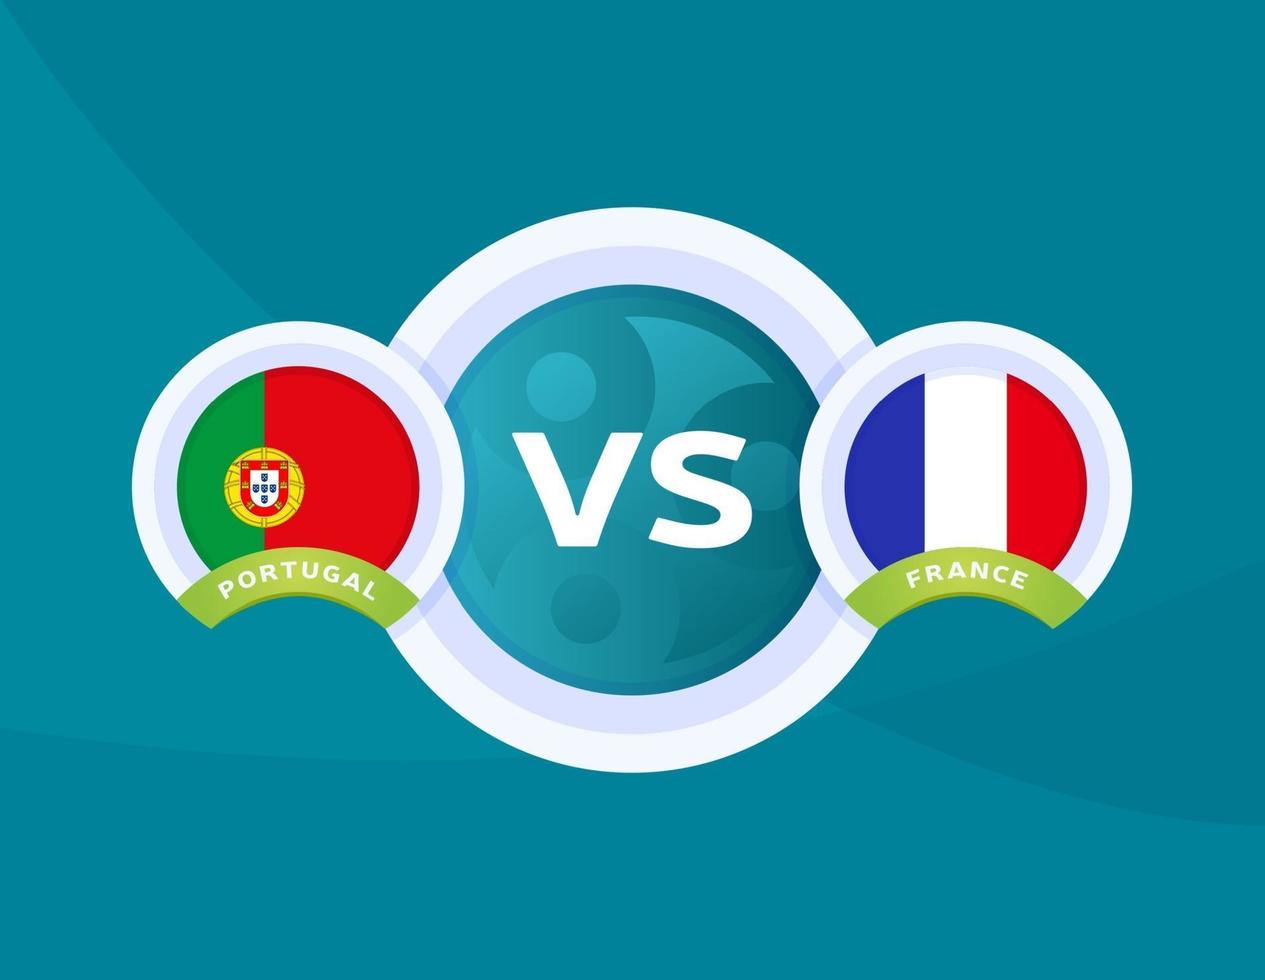 Portugal vs France football vector